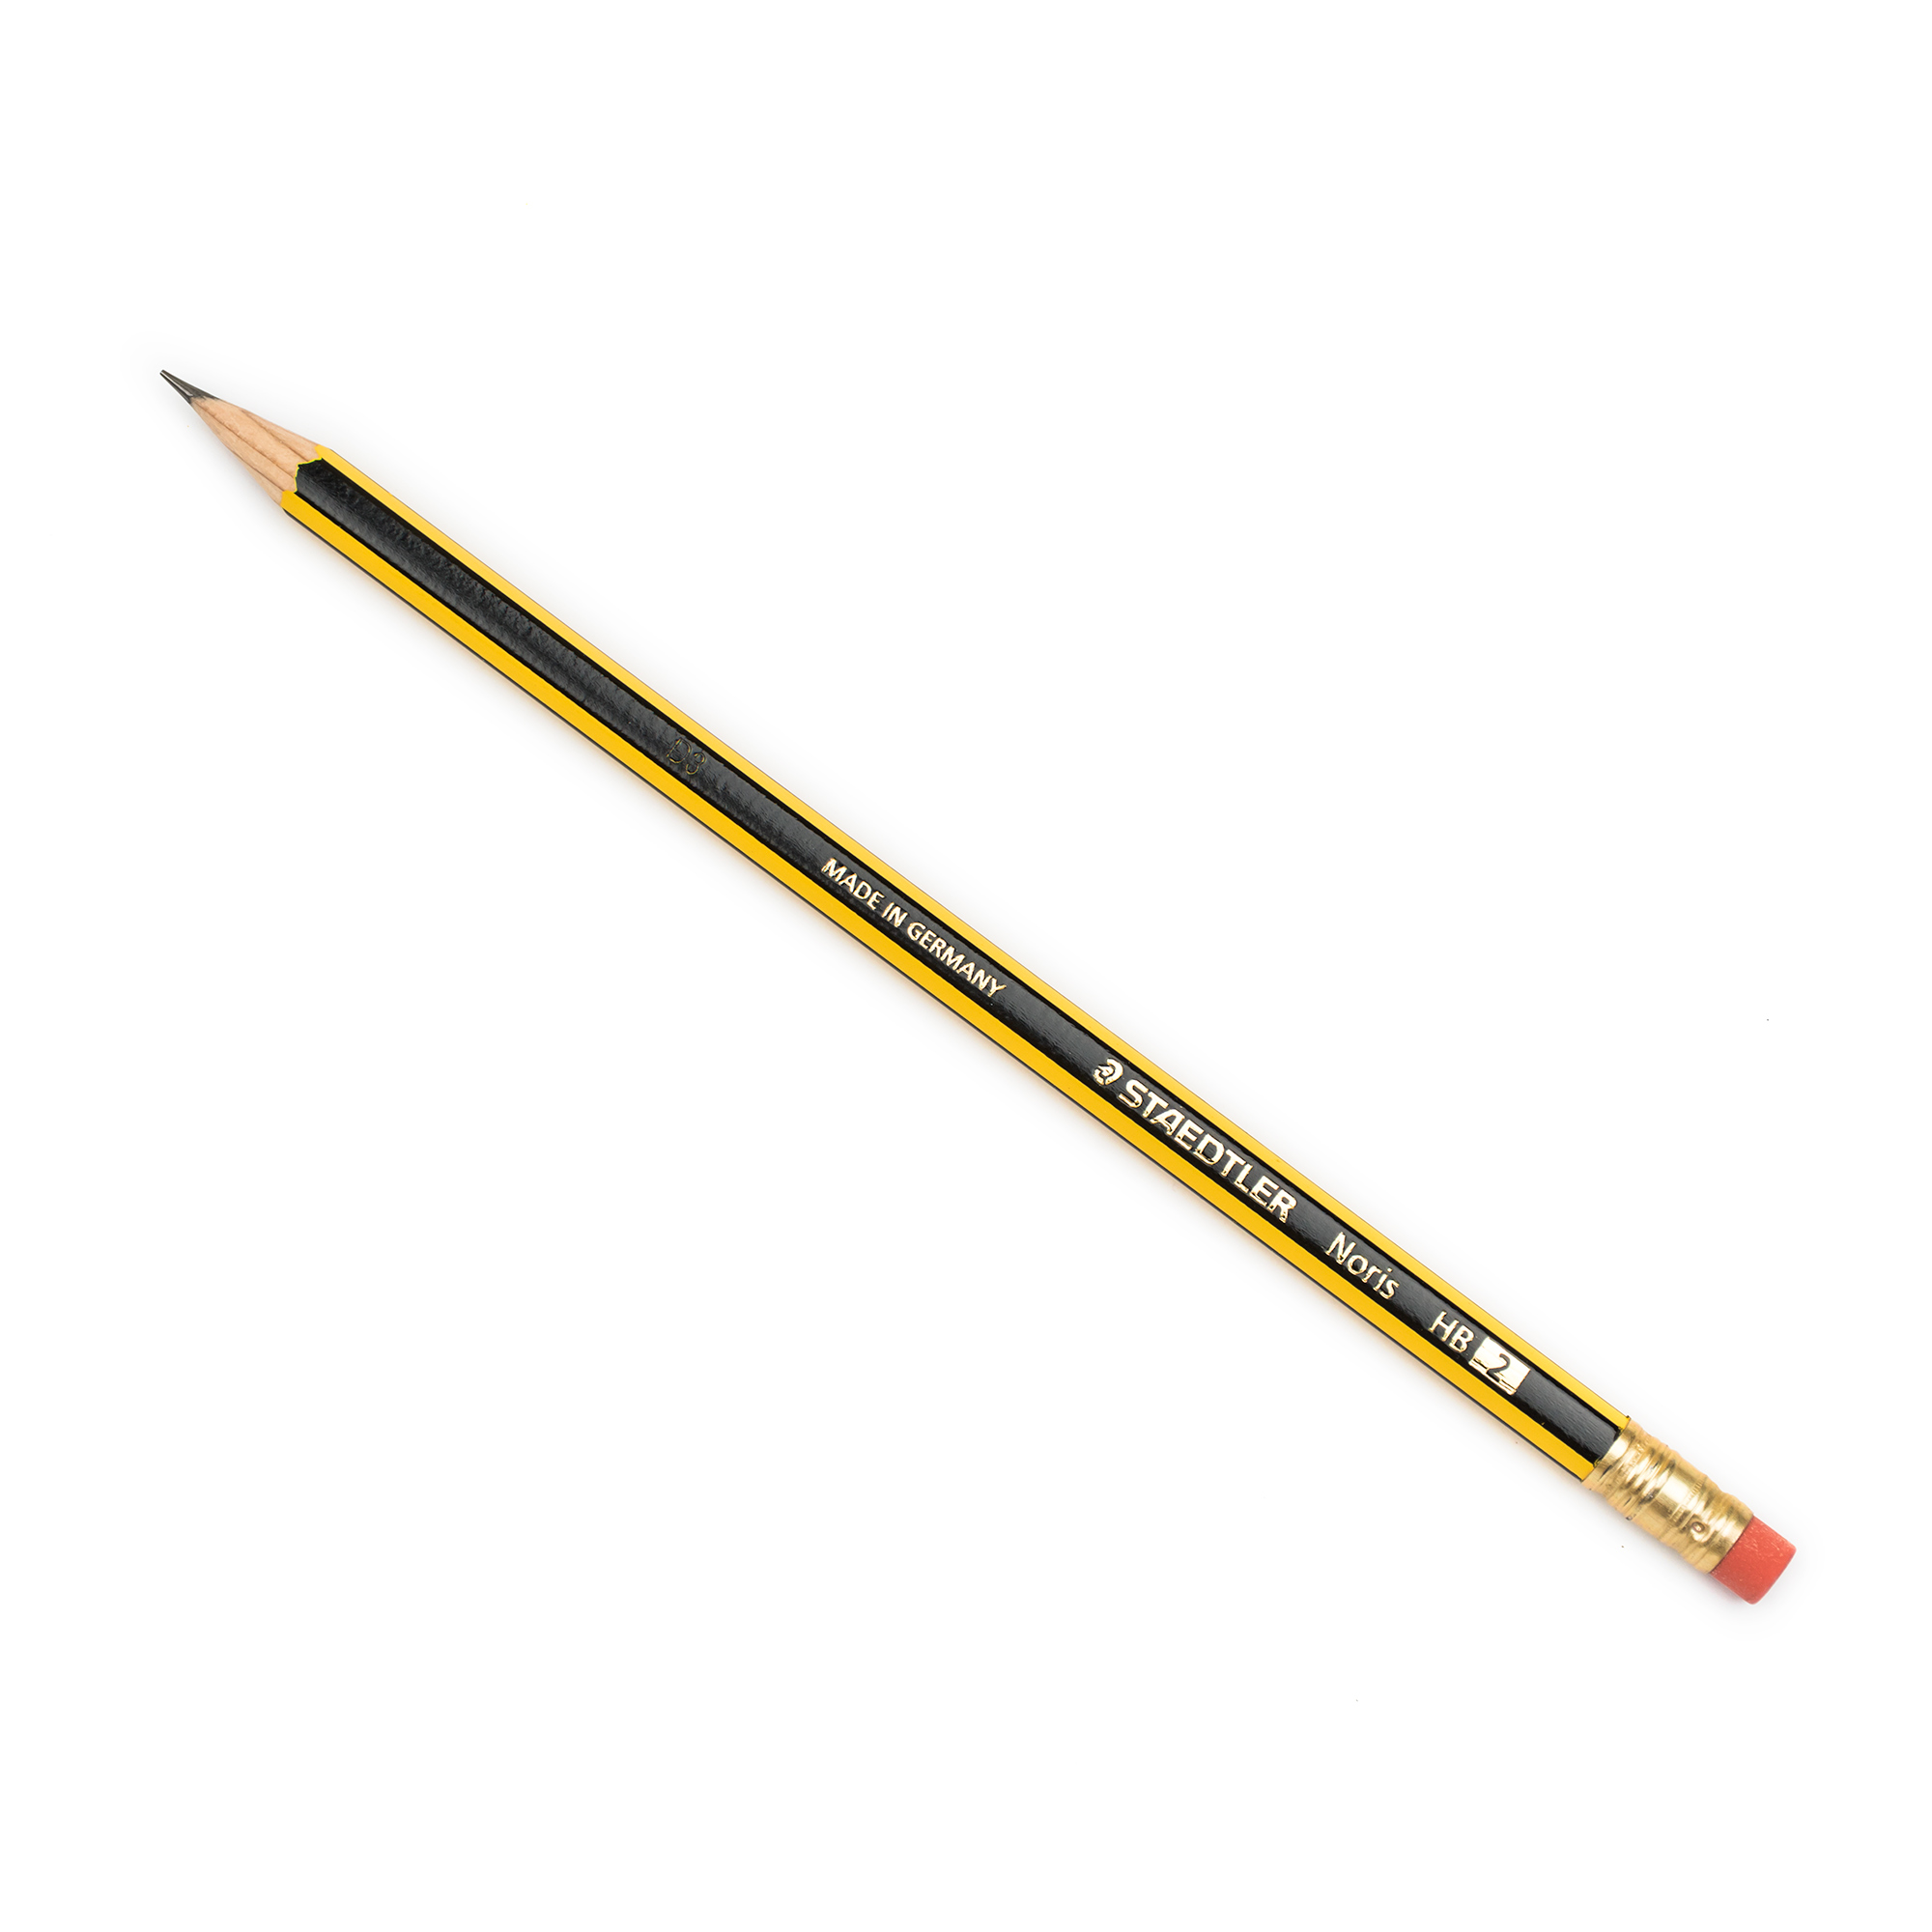 Staedtler Noris 122 HB pencil with 